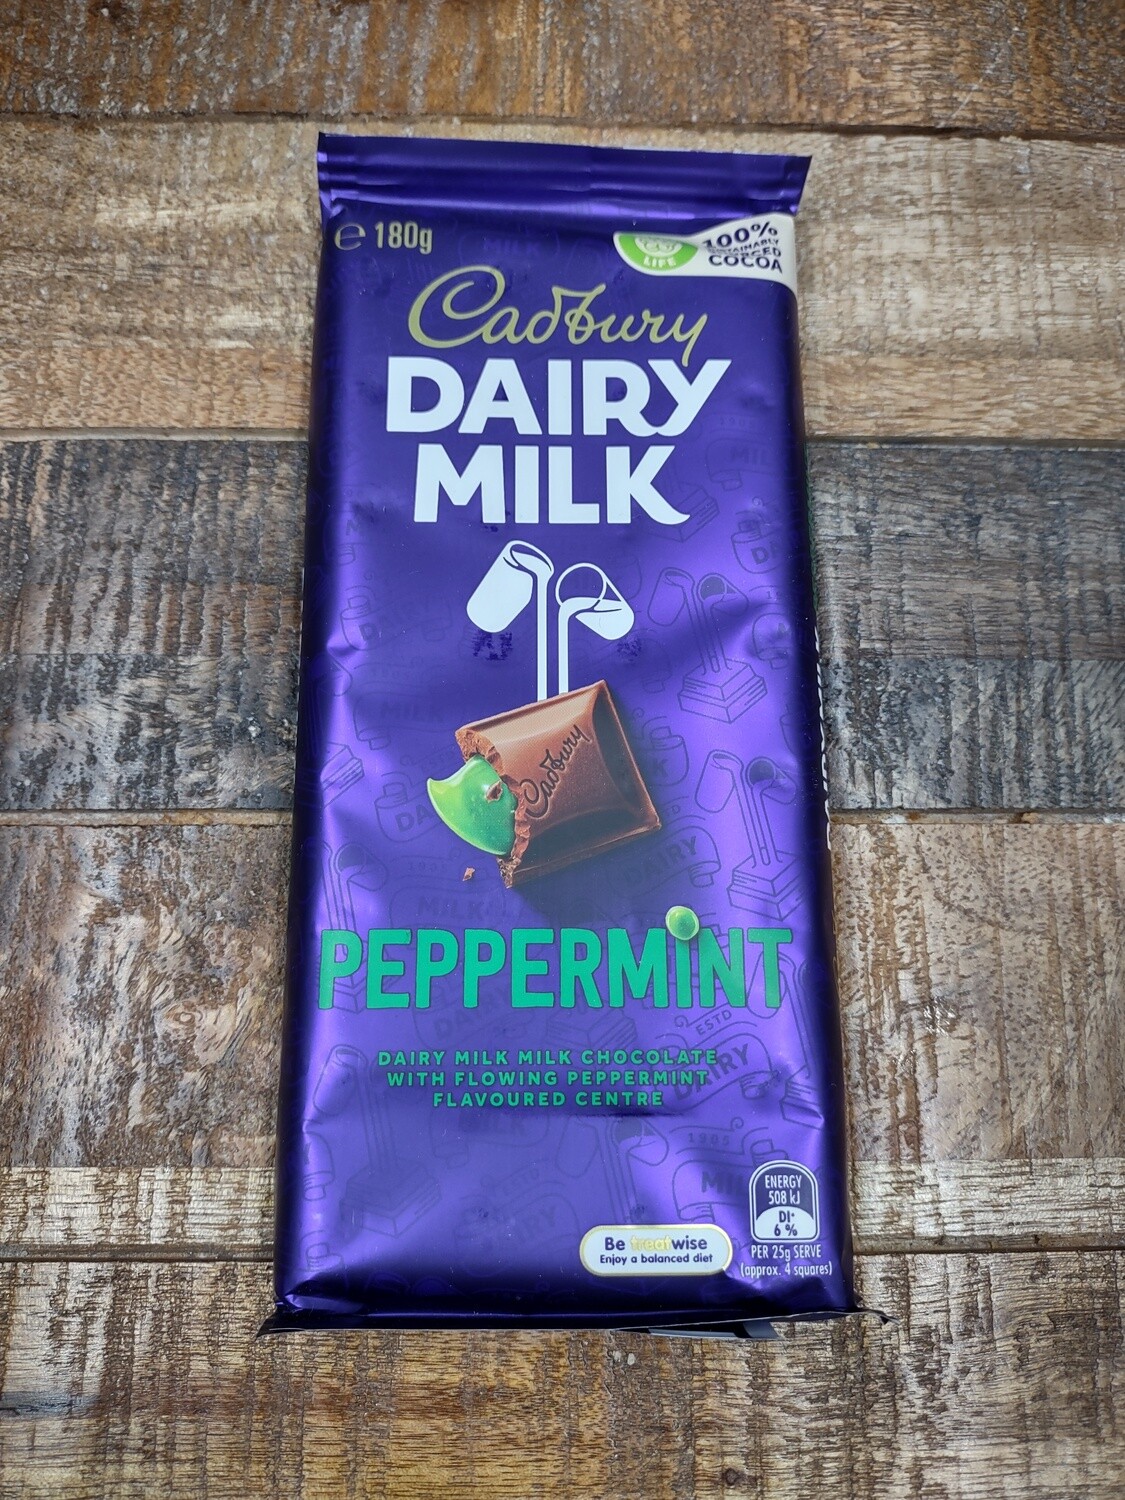 Cadbury Dairy Milk Peppermint 180g